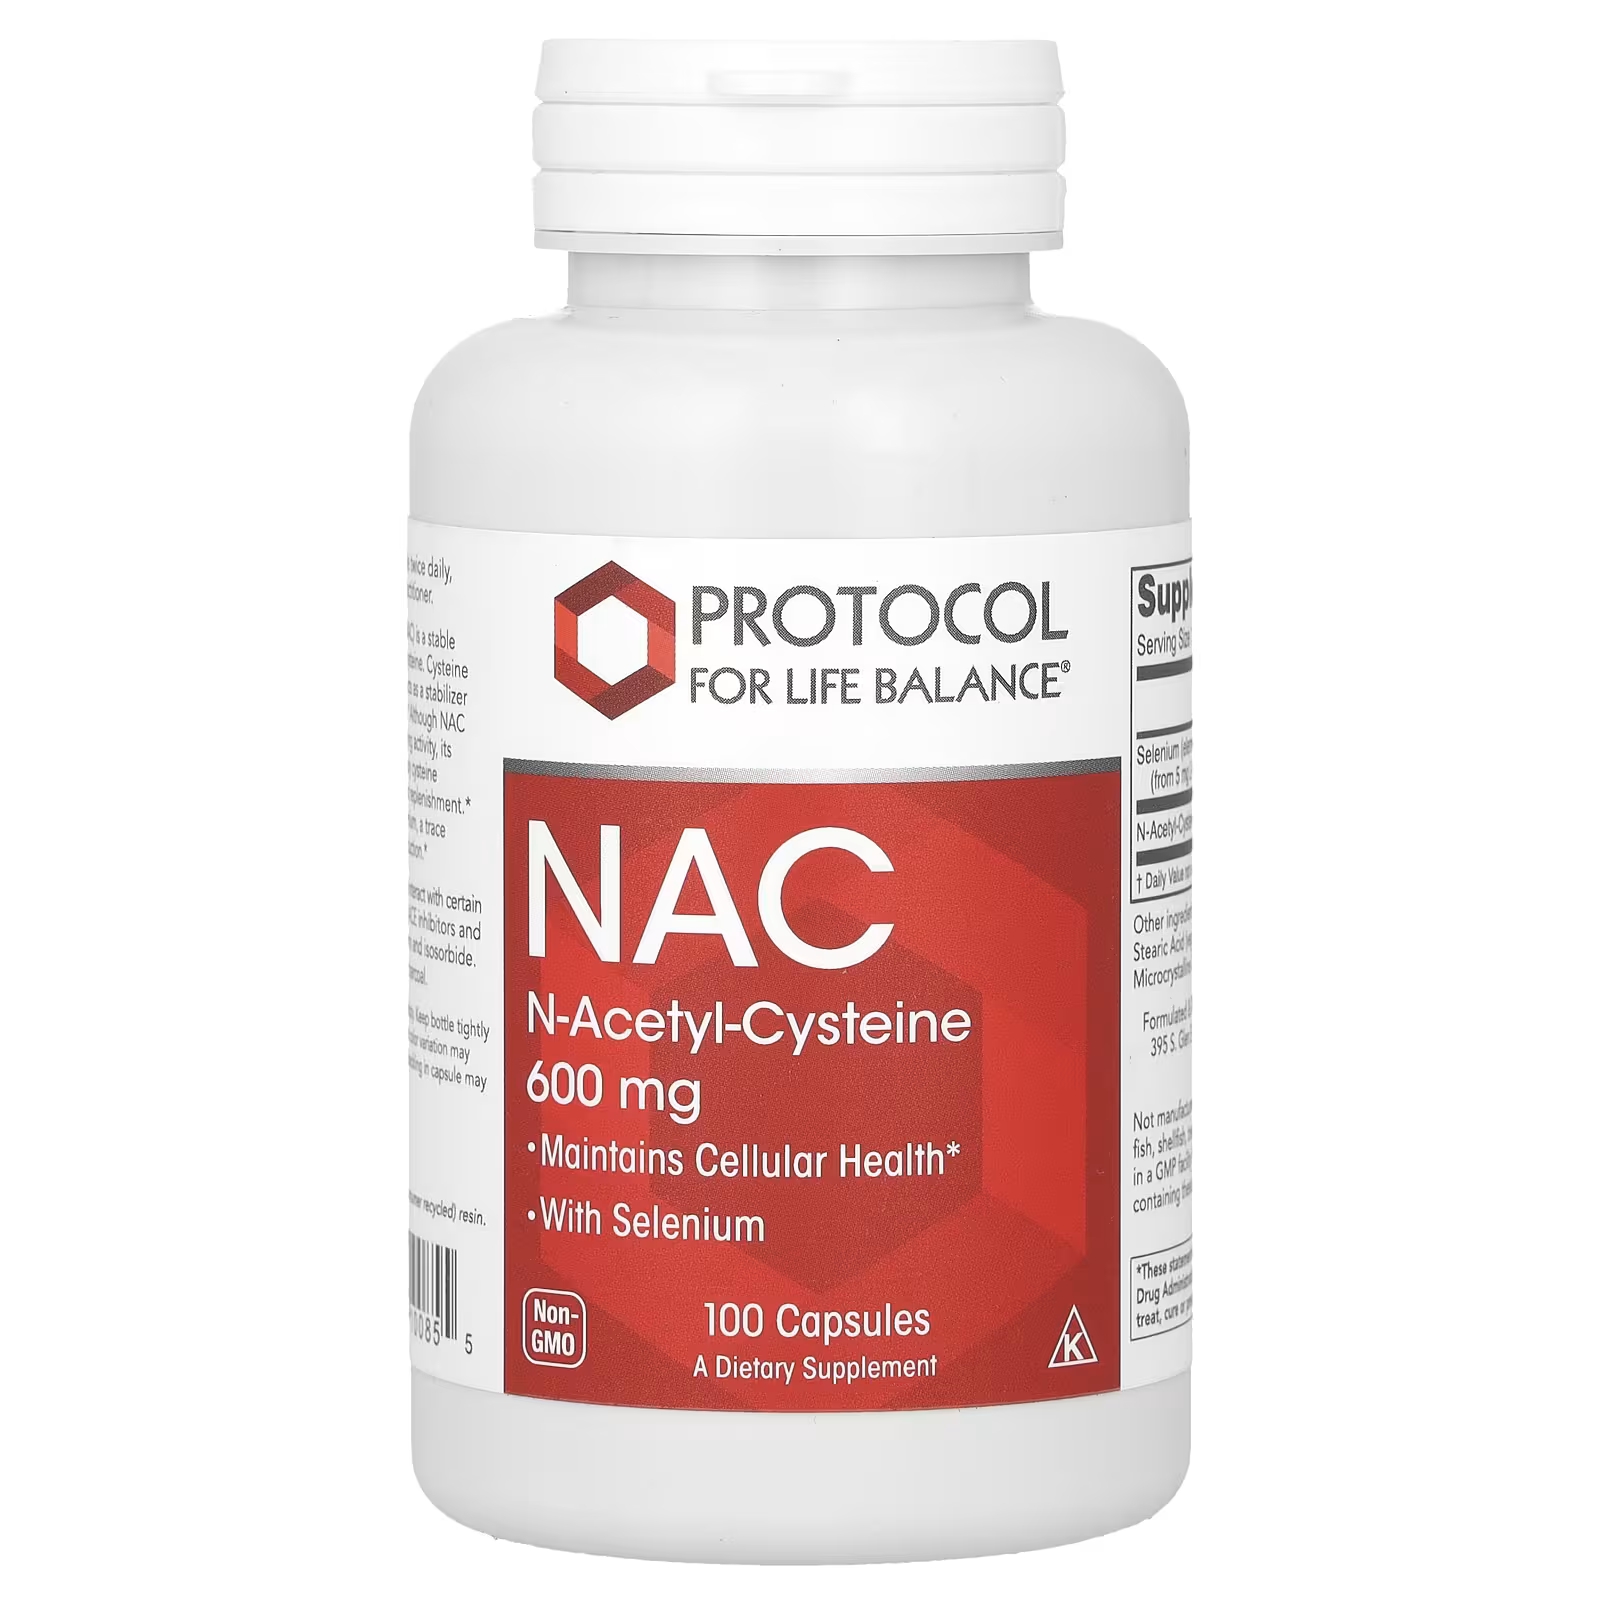 NAC N-ацетилцистеин Protocol for Life Balance 600 мг, 100 растительных капсул nac n ацетилцистеин protocol for life balance 600 мг 100 растительных капсул